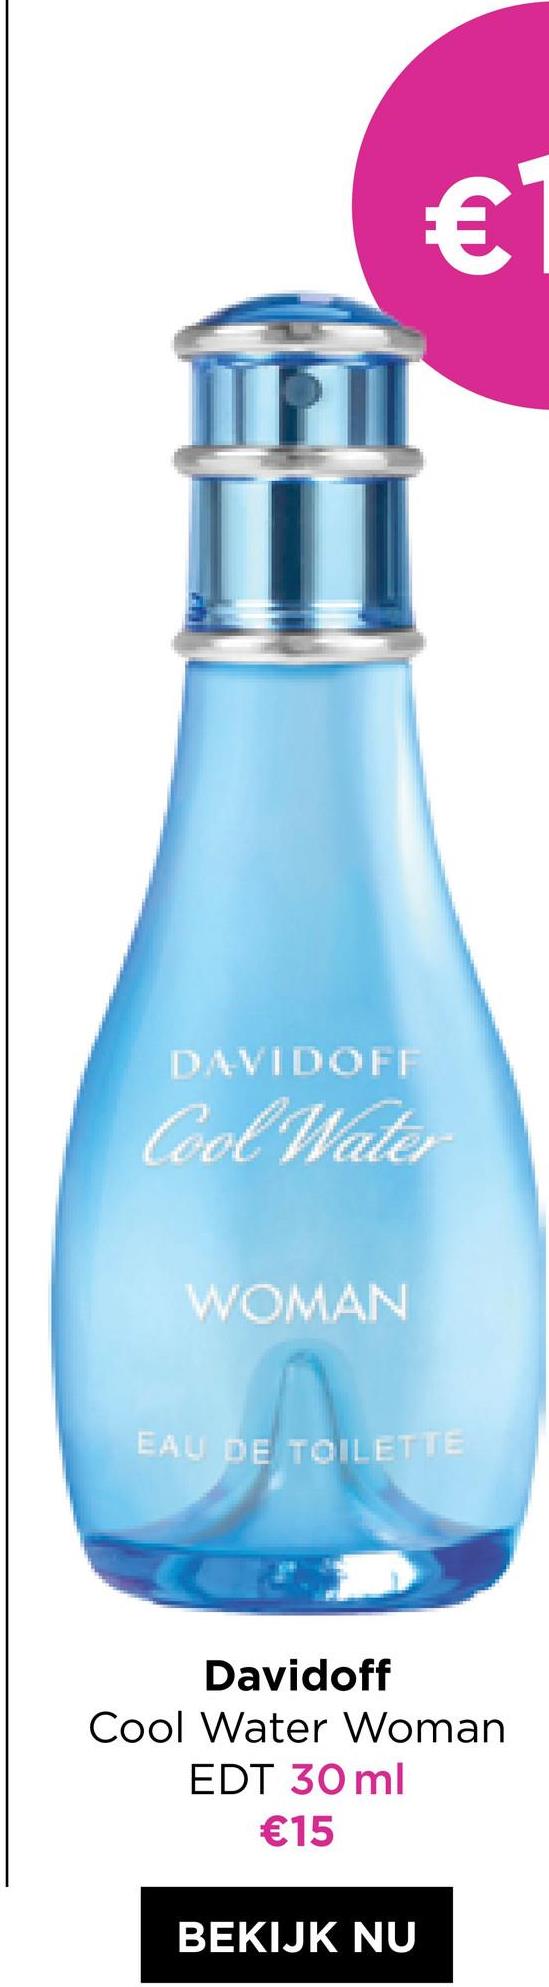 €1
DAVIDOFF
Cool Water
WOMAN
EAU DE TOILETTE
Davidoff
Cool Water Woman
EDT 30 ml
€15
BEKIJK NU